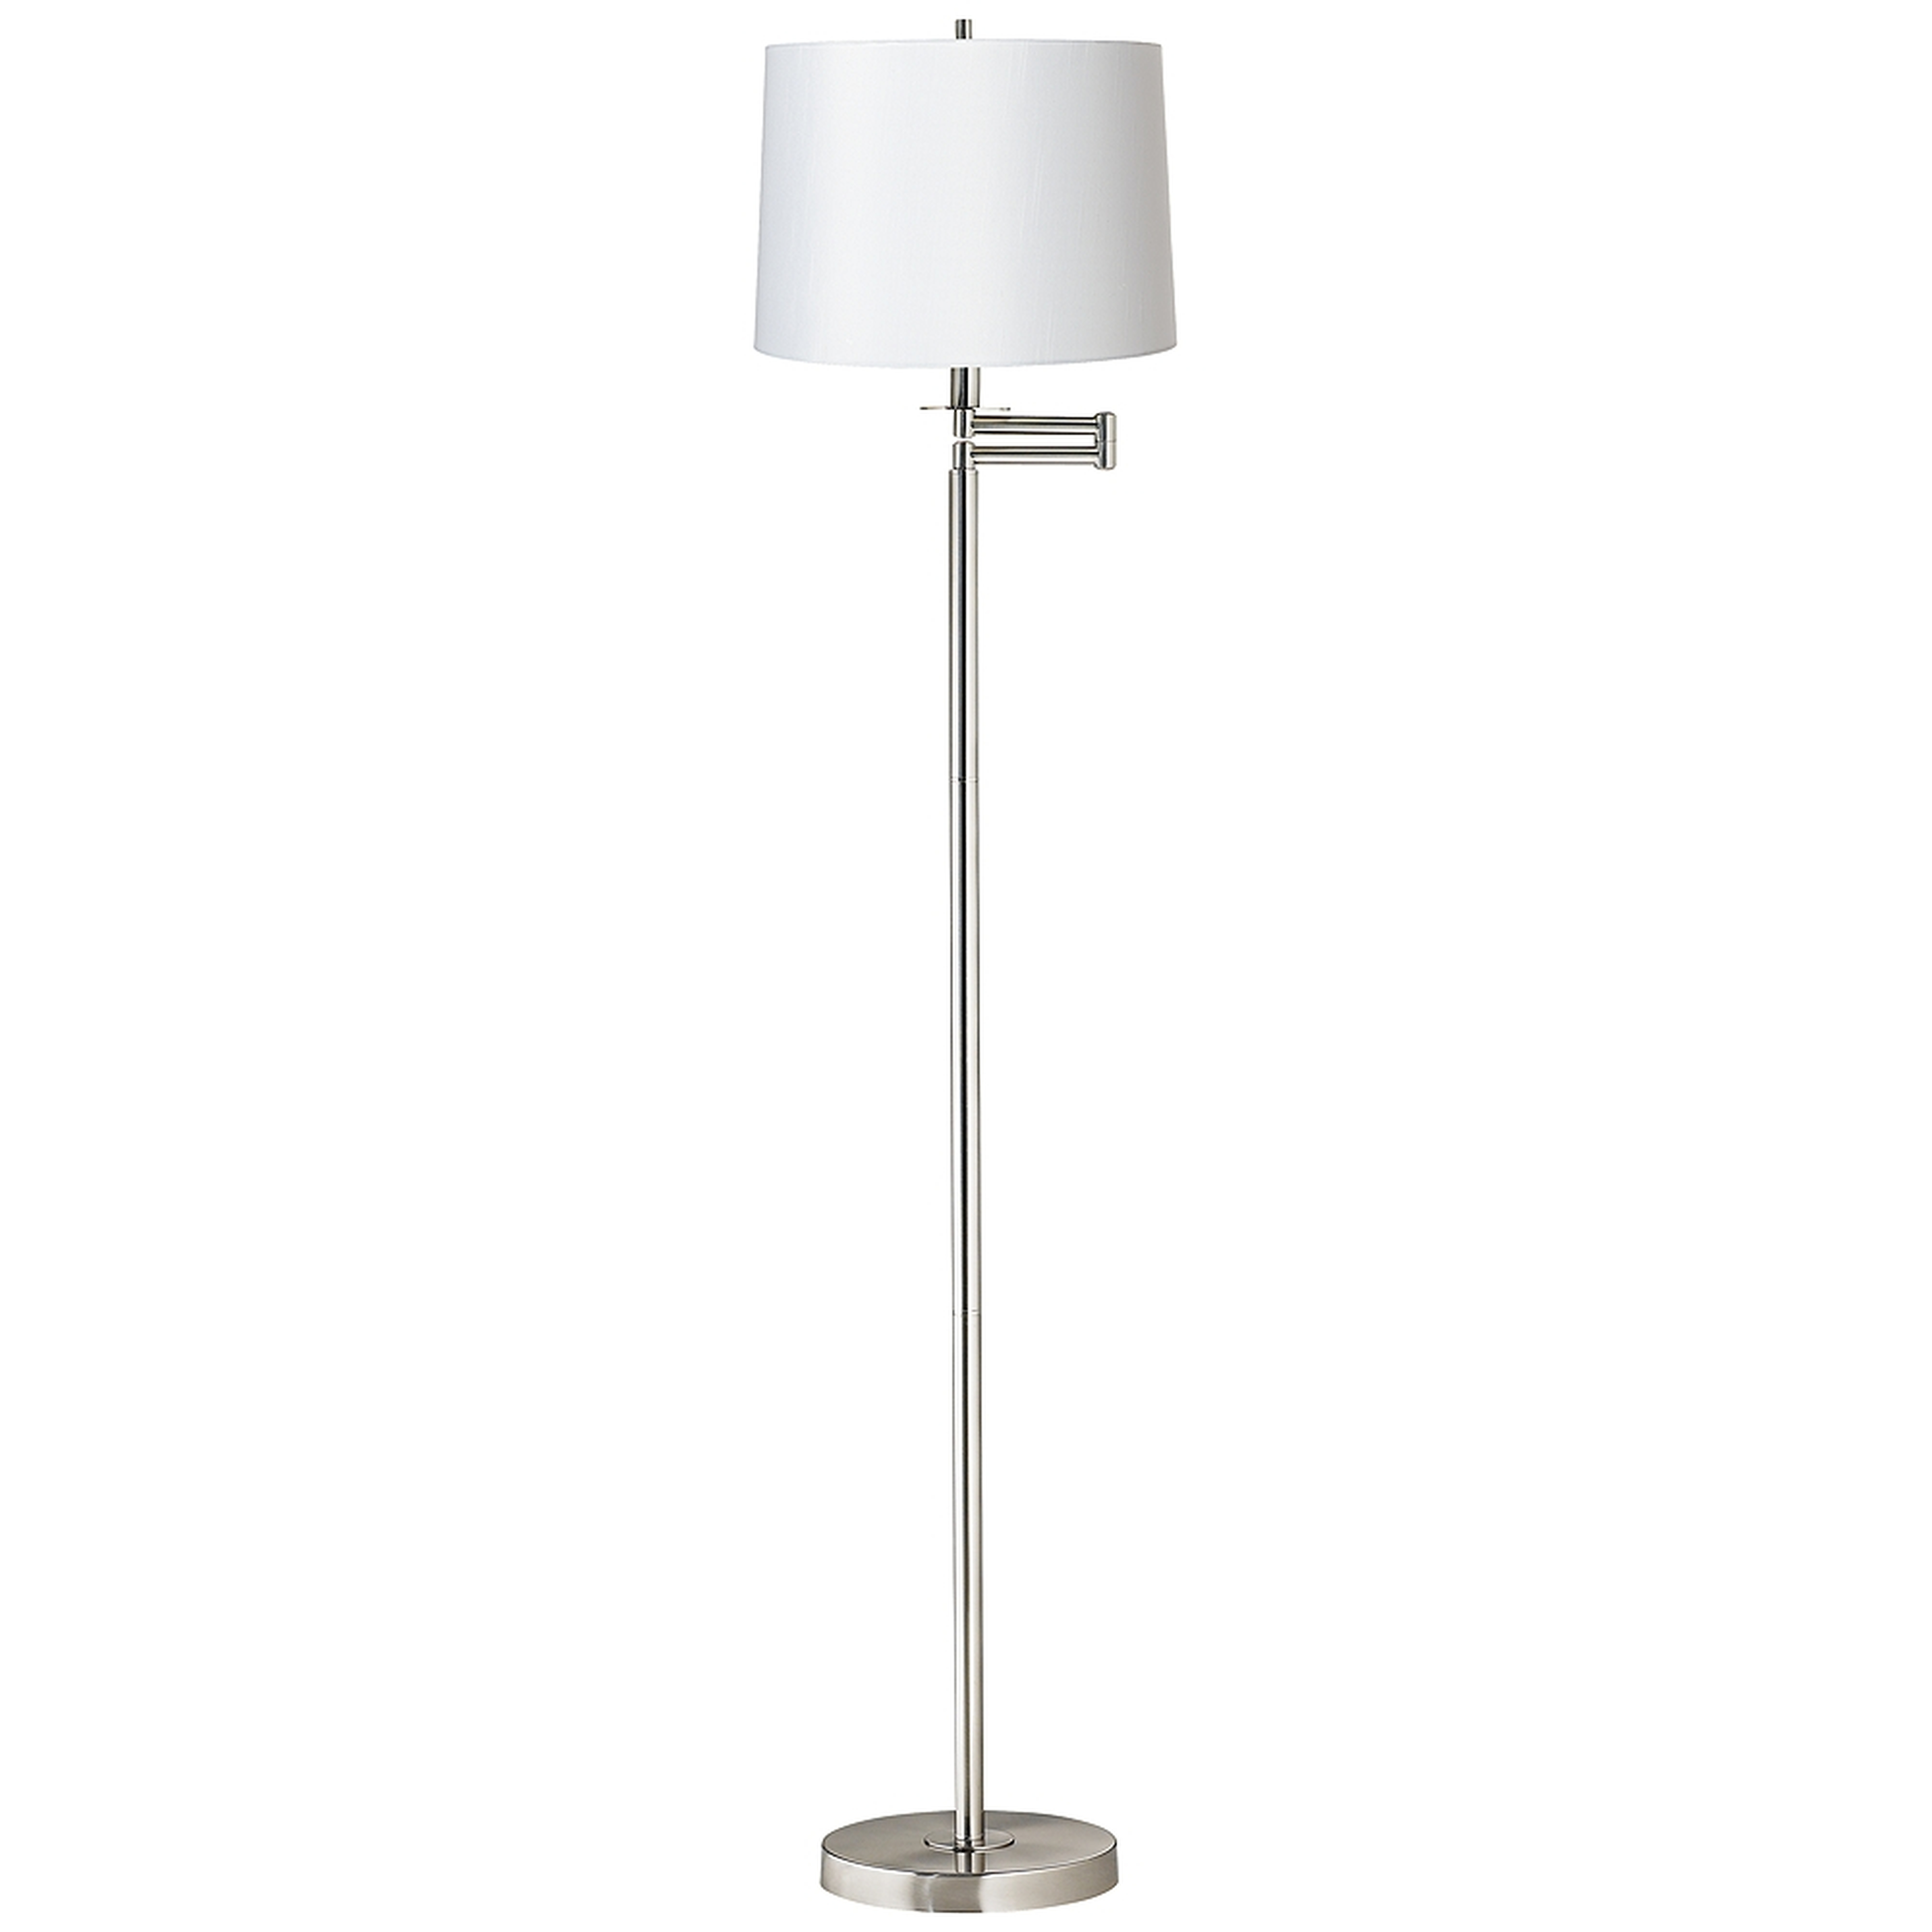 White Brushed Nickel Swing Arm Floor Lamp - Style # 17D88 - Lamps Plus